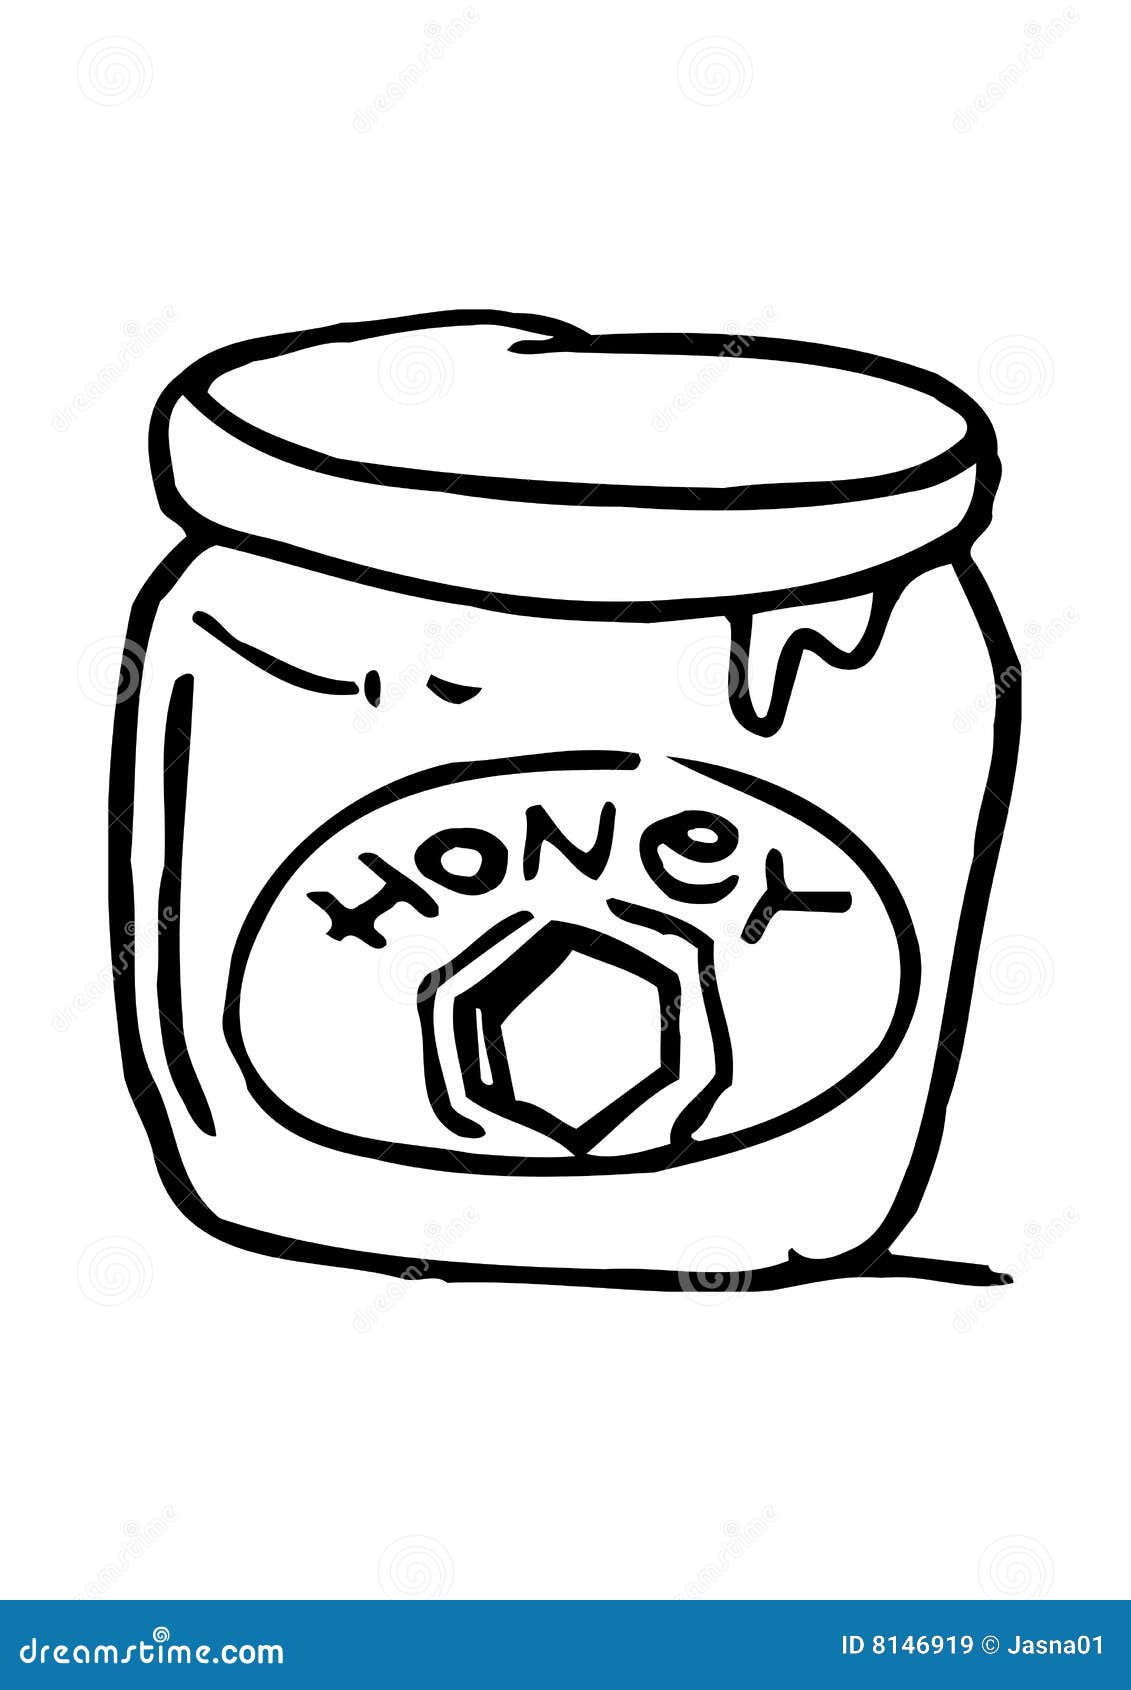 honey clipart image - photo #45